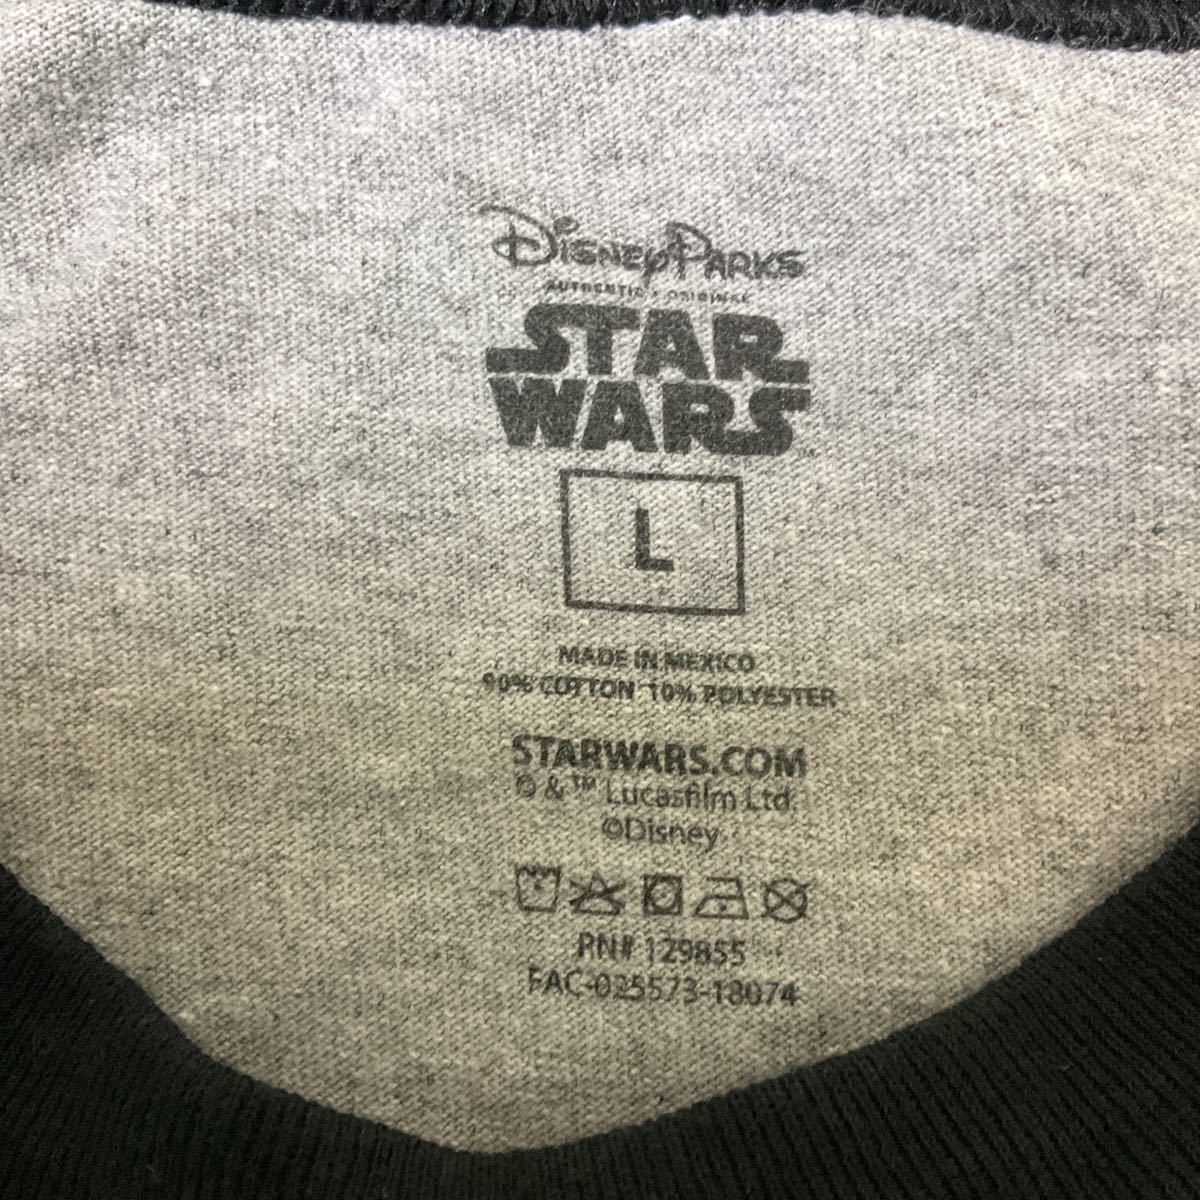 Disneys Parks STAR WARS スターウォーズ リンガーT シャツ 半袖 L 古着